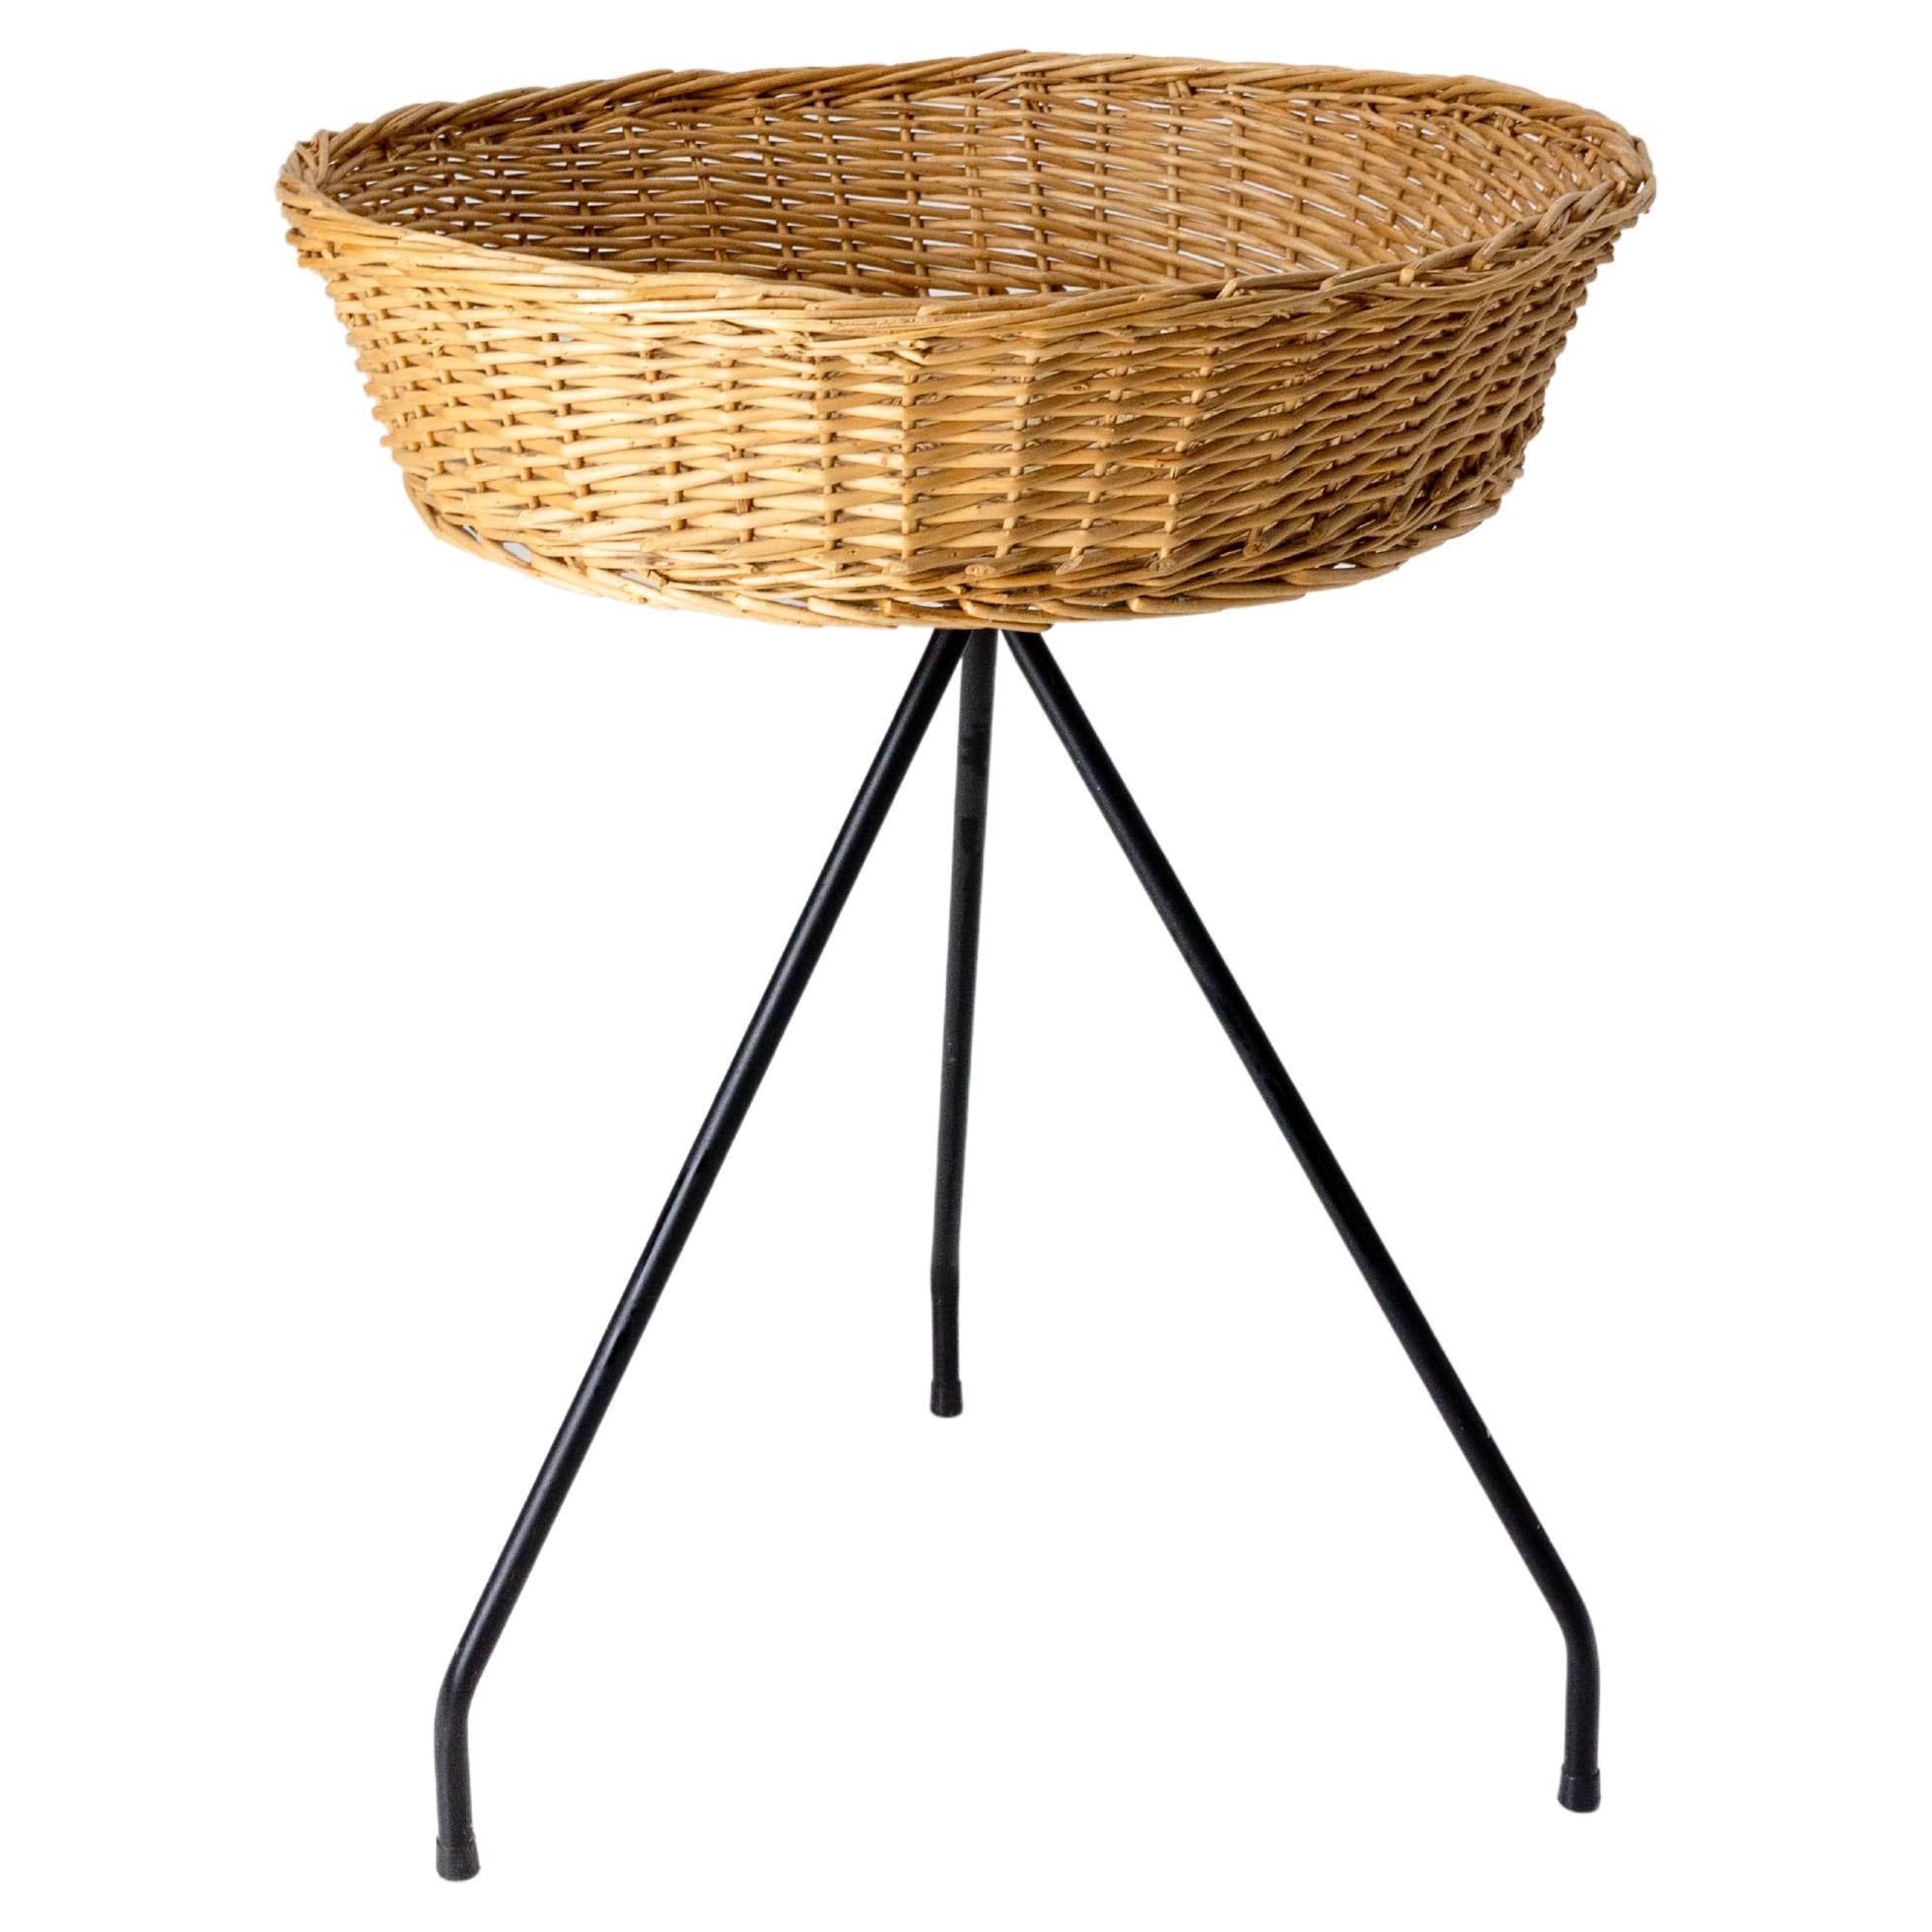 French Rattan Basket Stand Iron Legs Midcentury